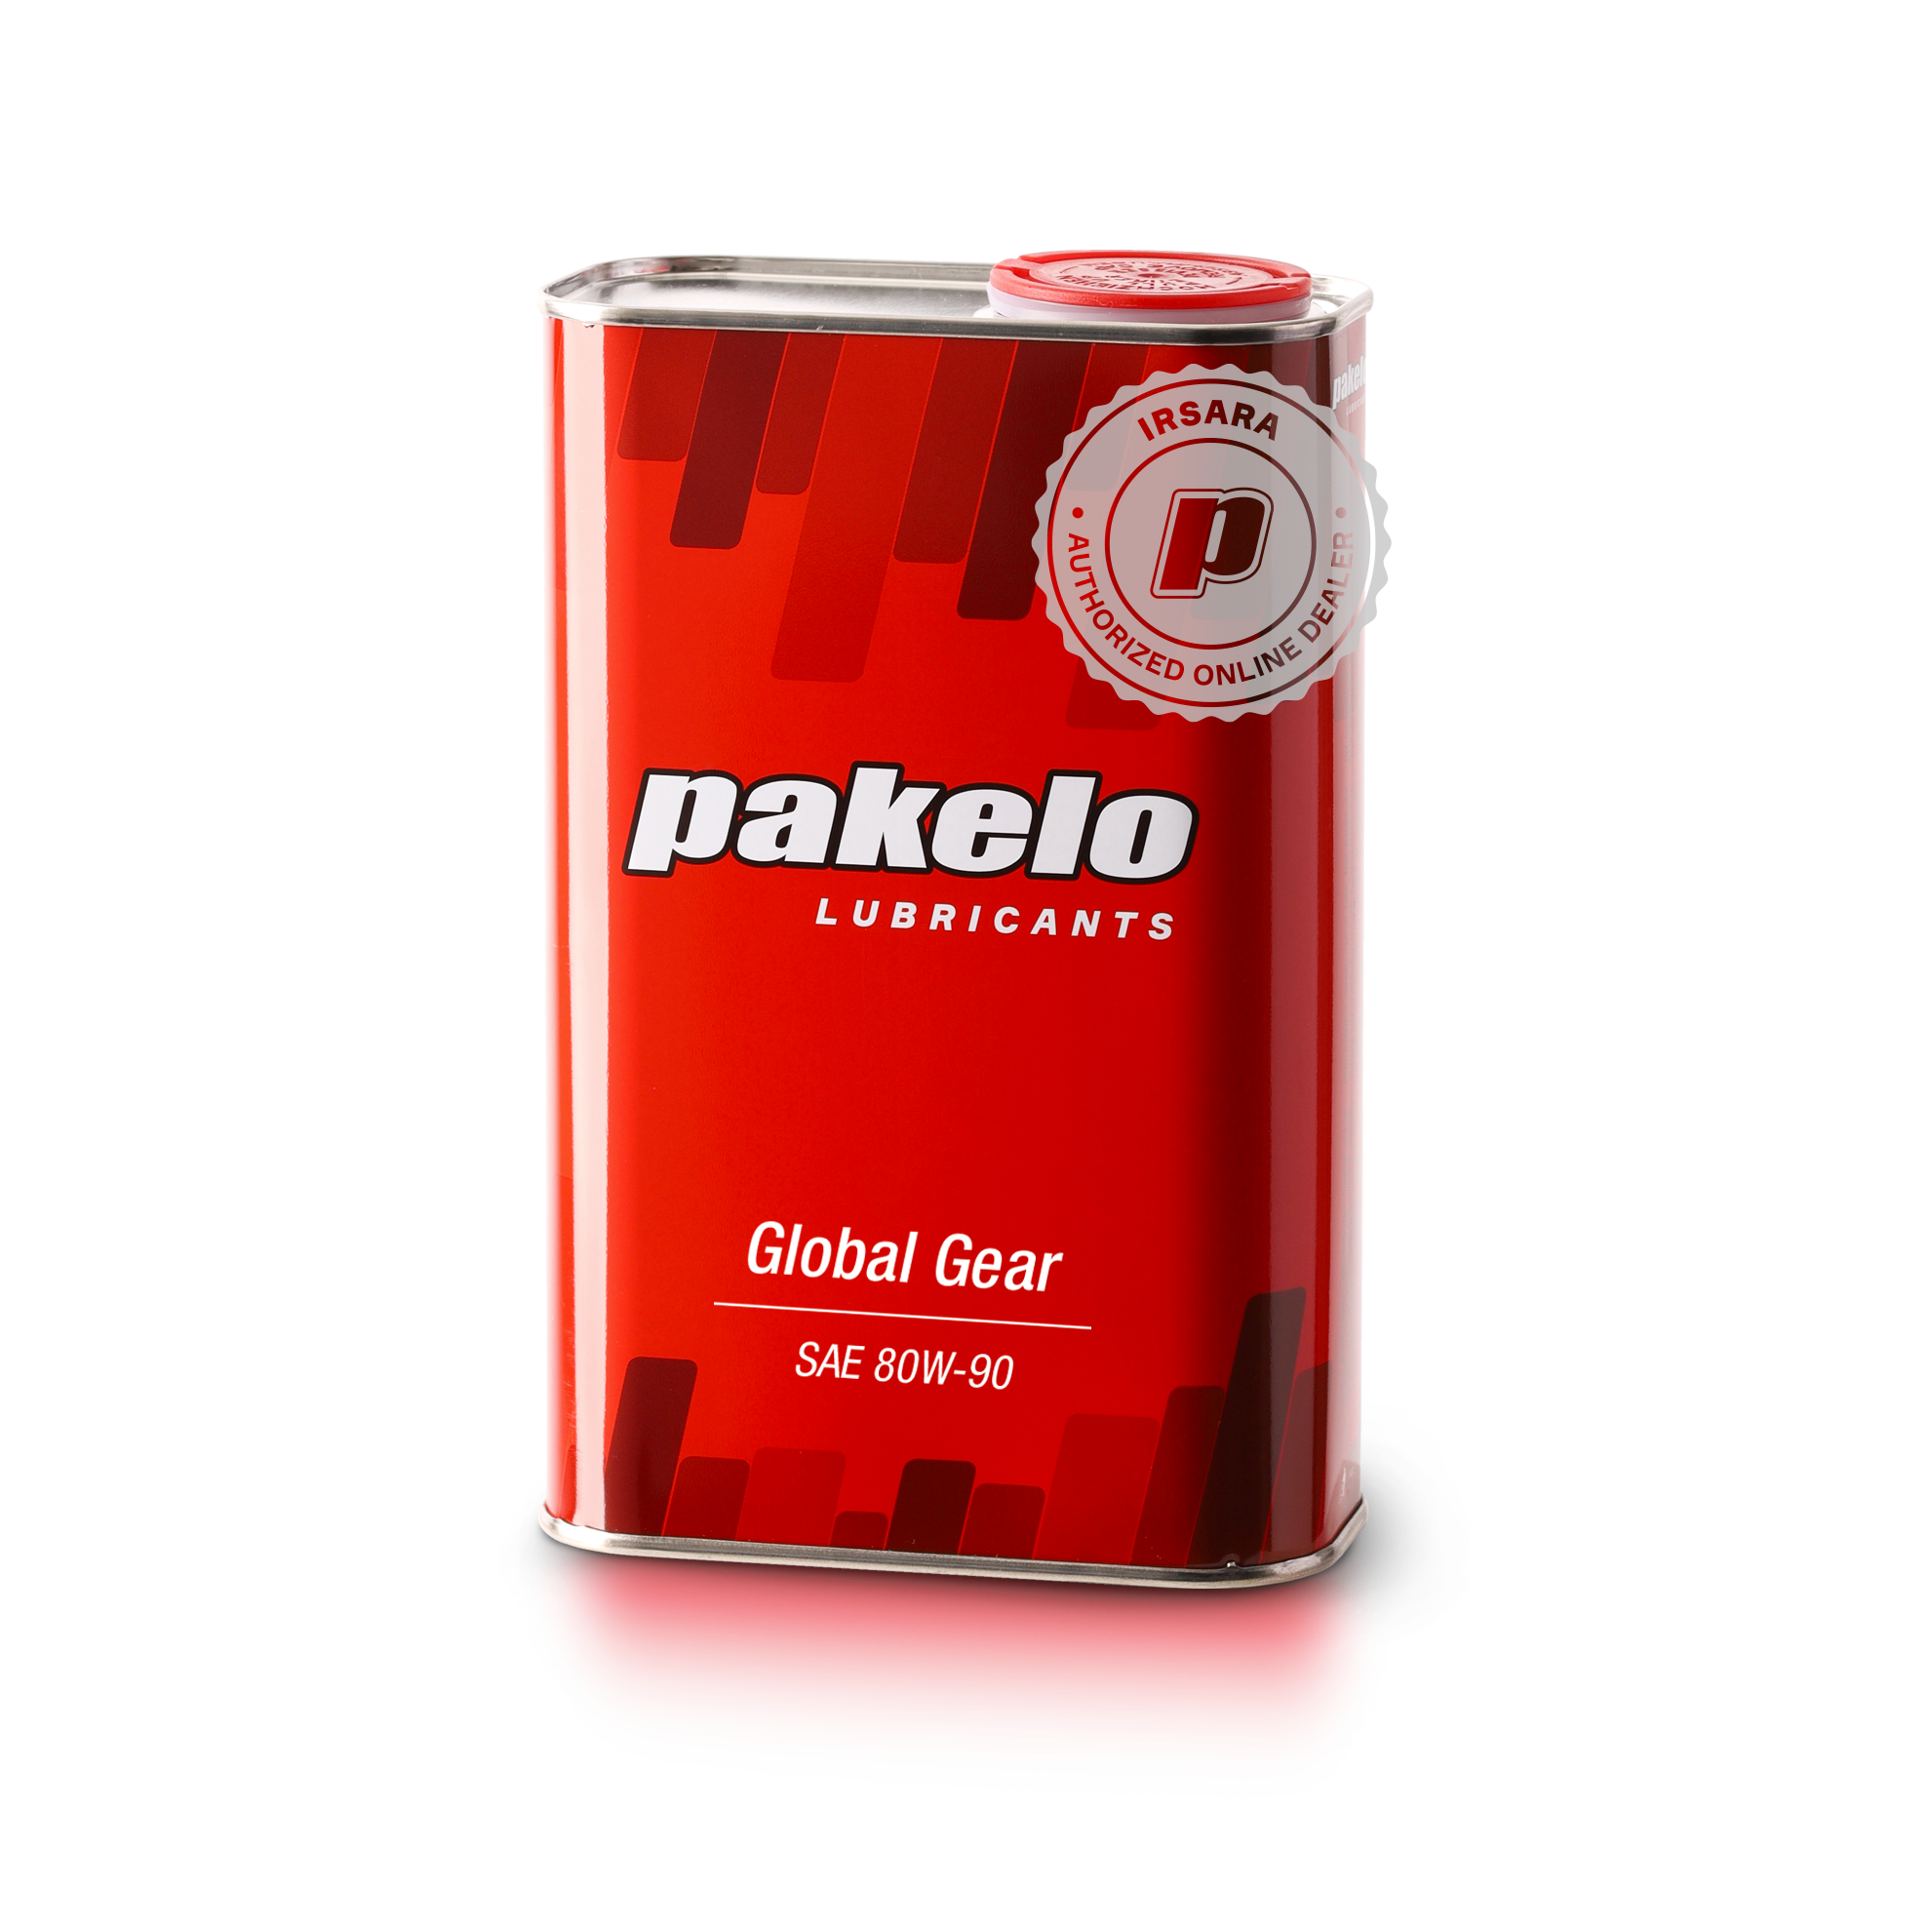 Pakelo Global Gear Sae 80W-90 (1L)